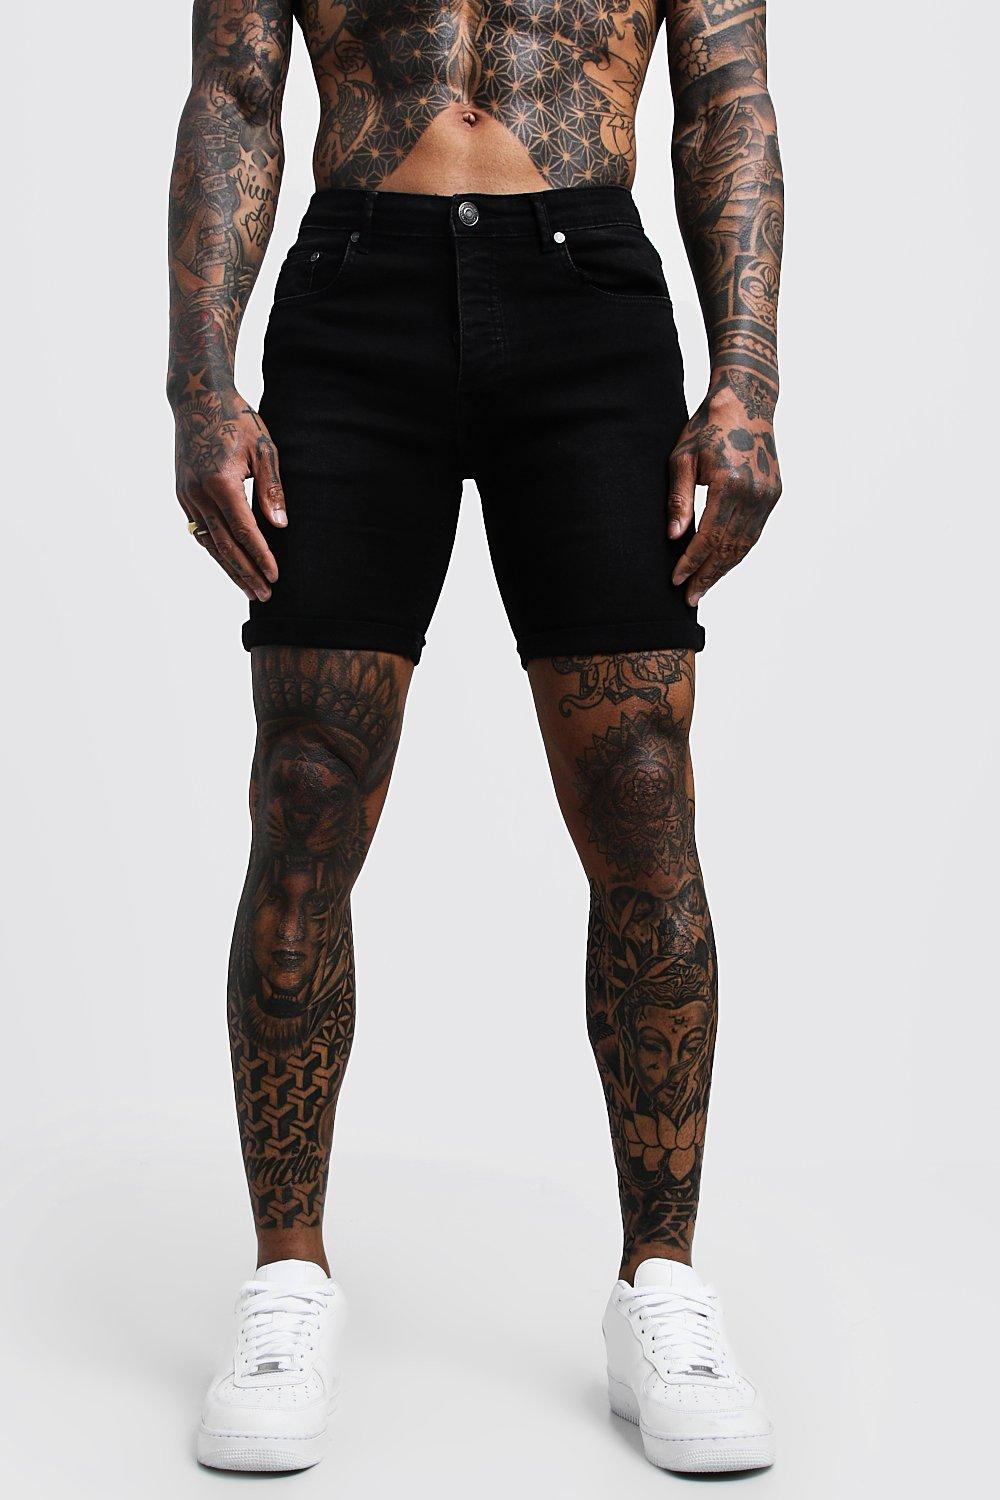 jean shorts men black